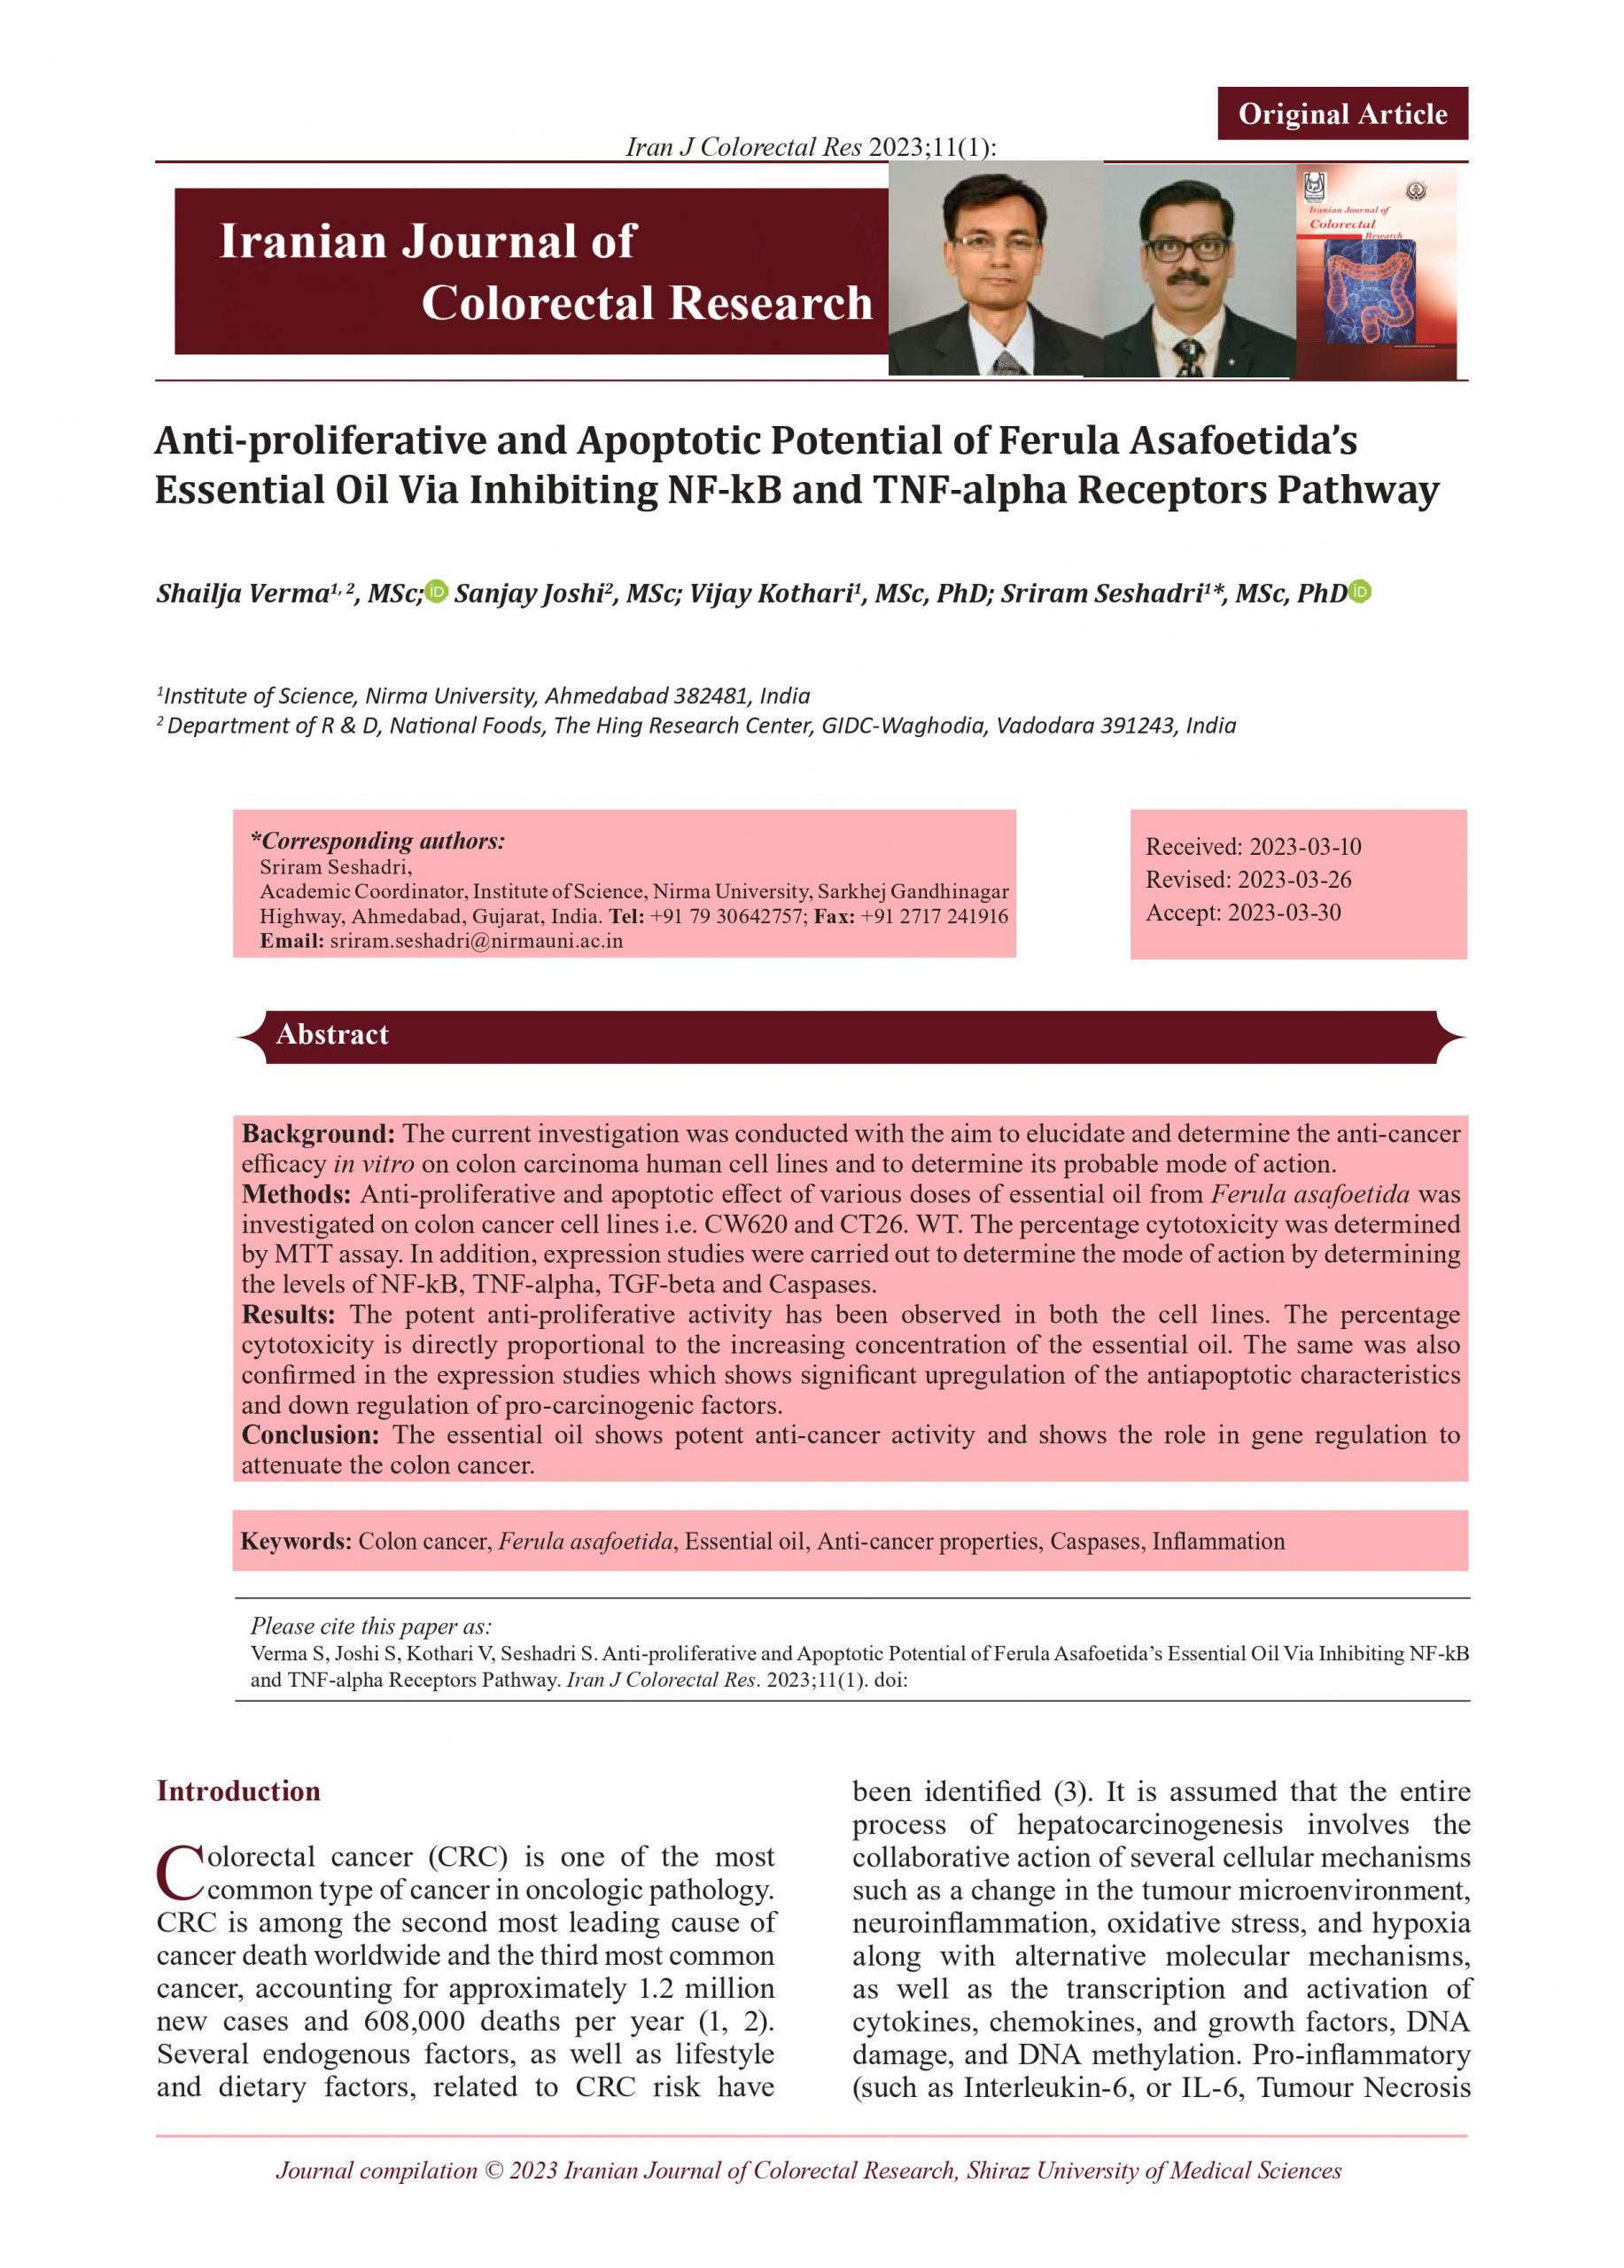 Anti-proliferative and Apoptotic Potential of Ferula Asafoetida’s Essential Oil Via Inhibiting NF-kB and TNF-alpha Receptors Pathway